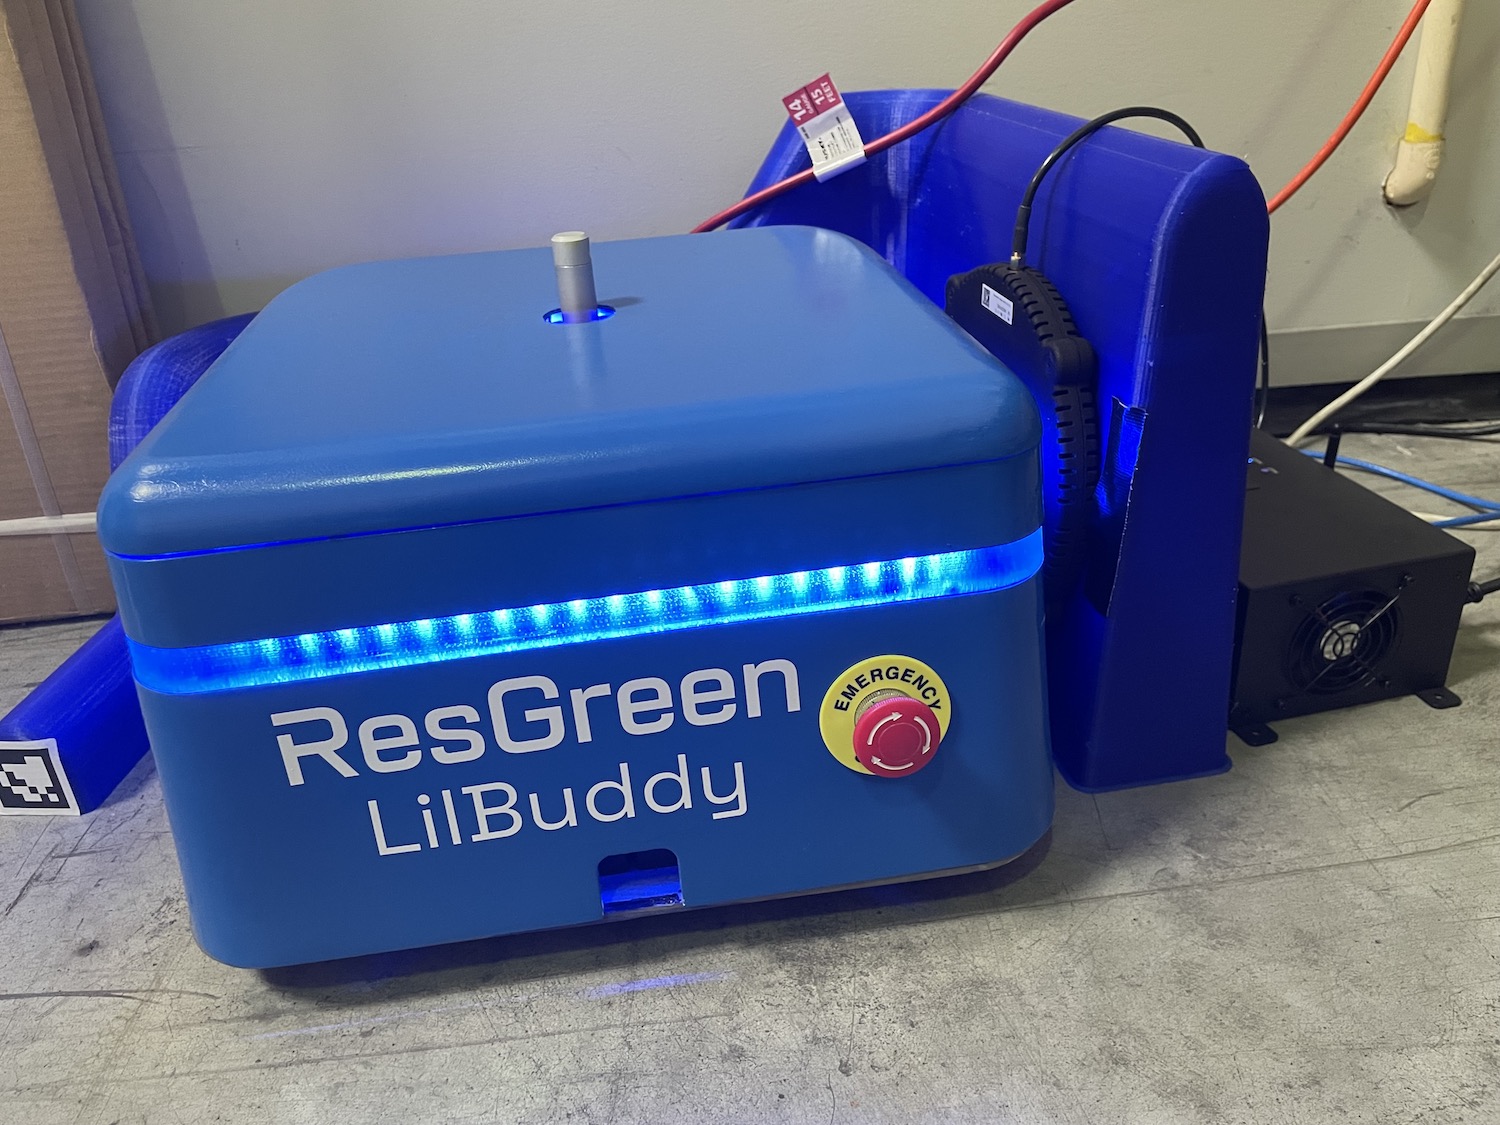 ResGreen's LilBuddy robot uses a WiBotic autonomous charger.